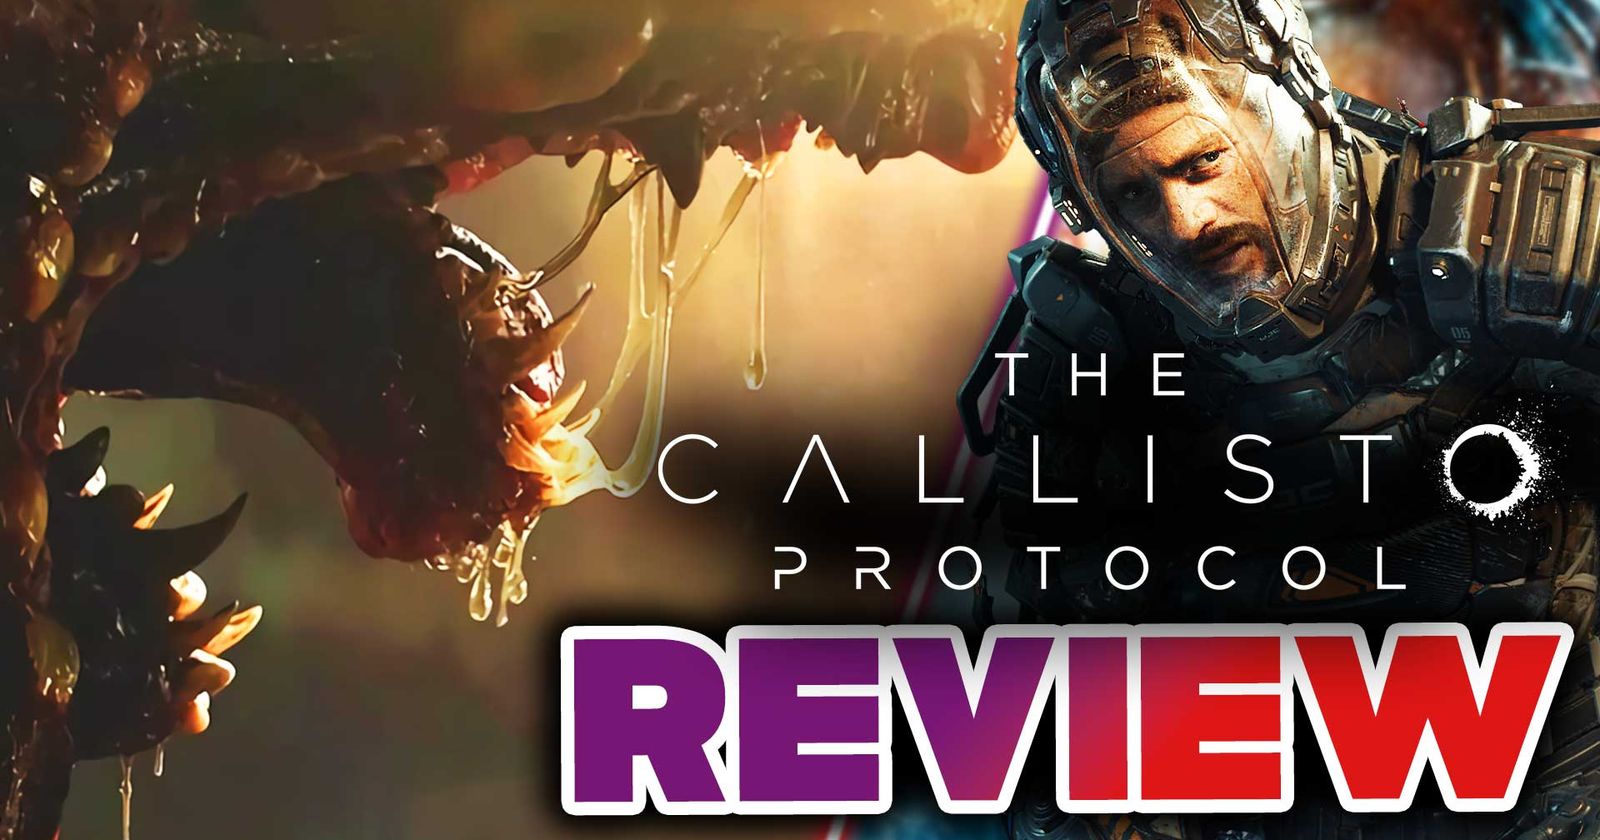 Callisto Protocol review: Action-heavy, horror-light